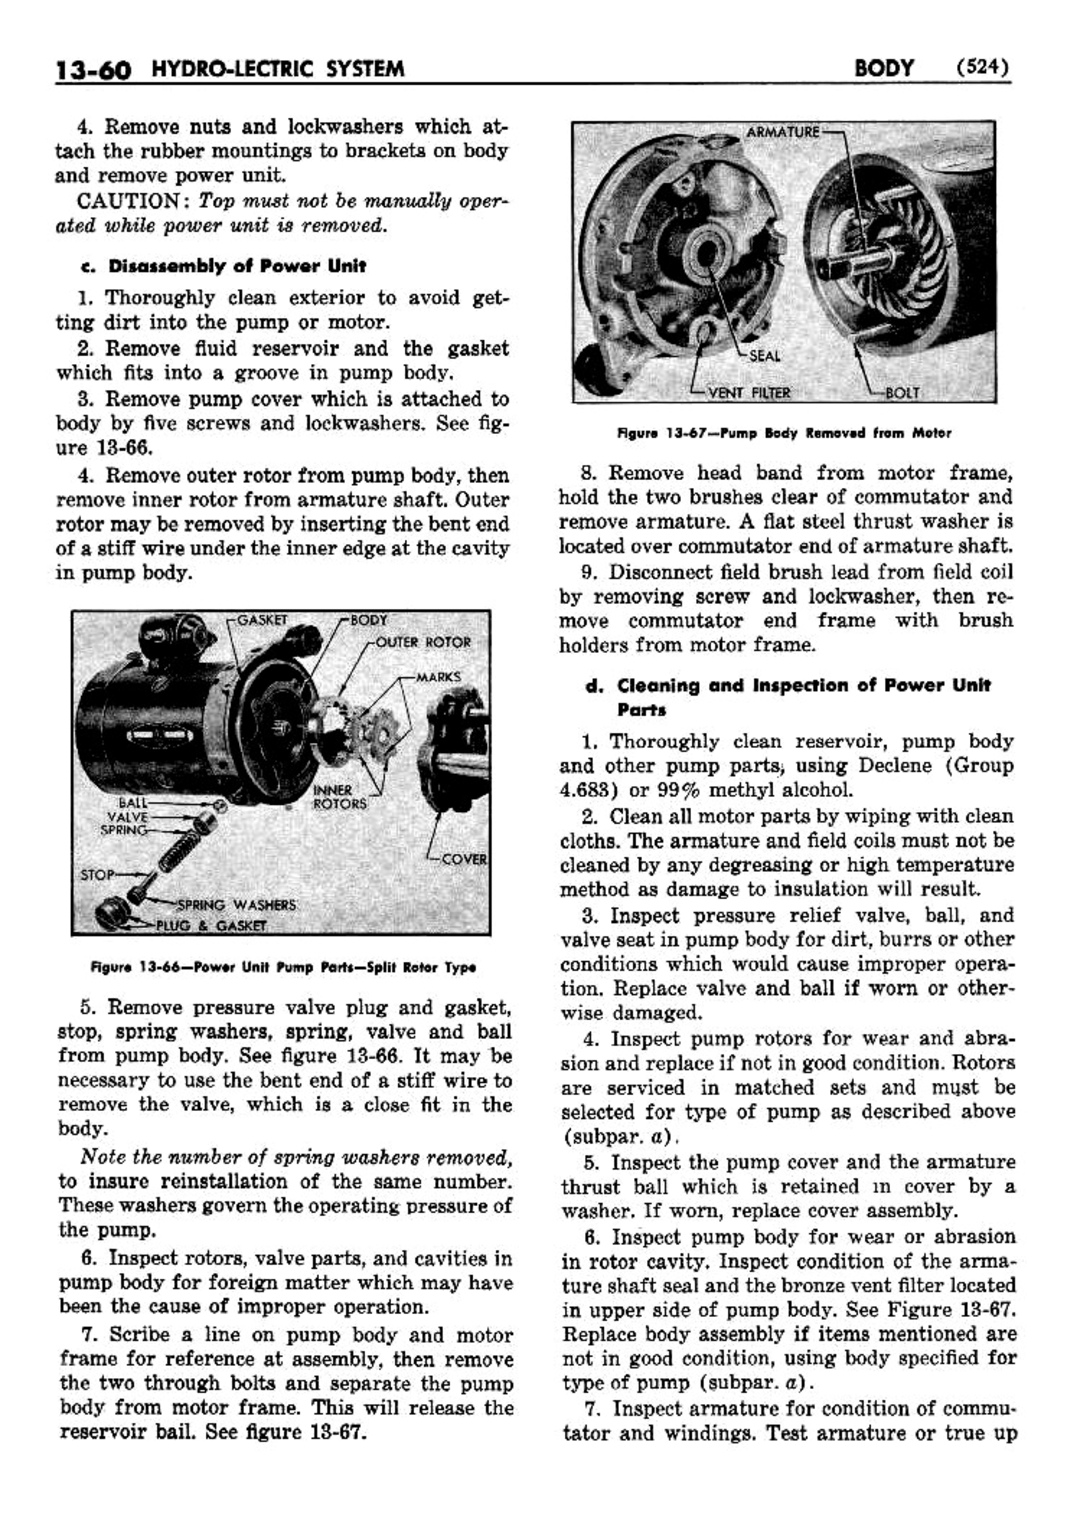 n_14 1952 Buick Shop Manual - Body-060-060.jpg